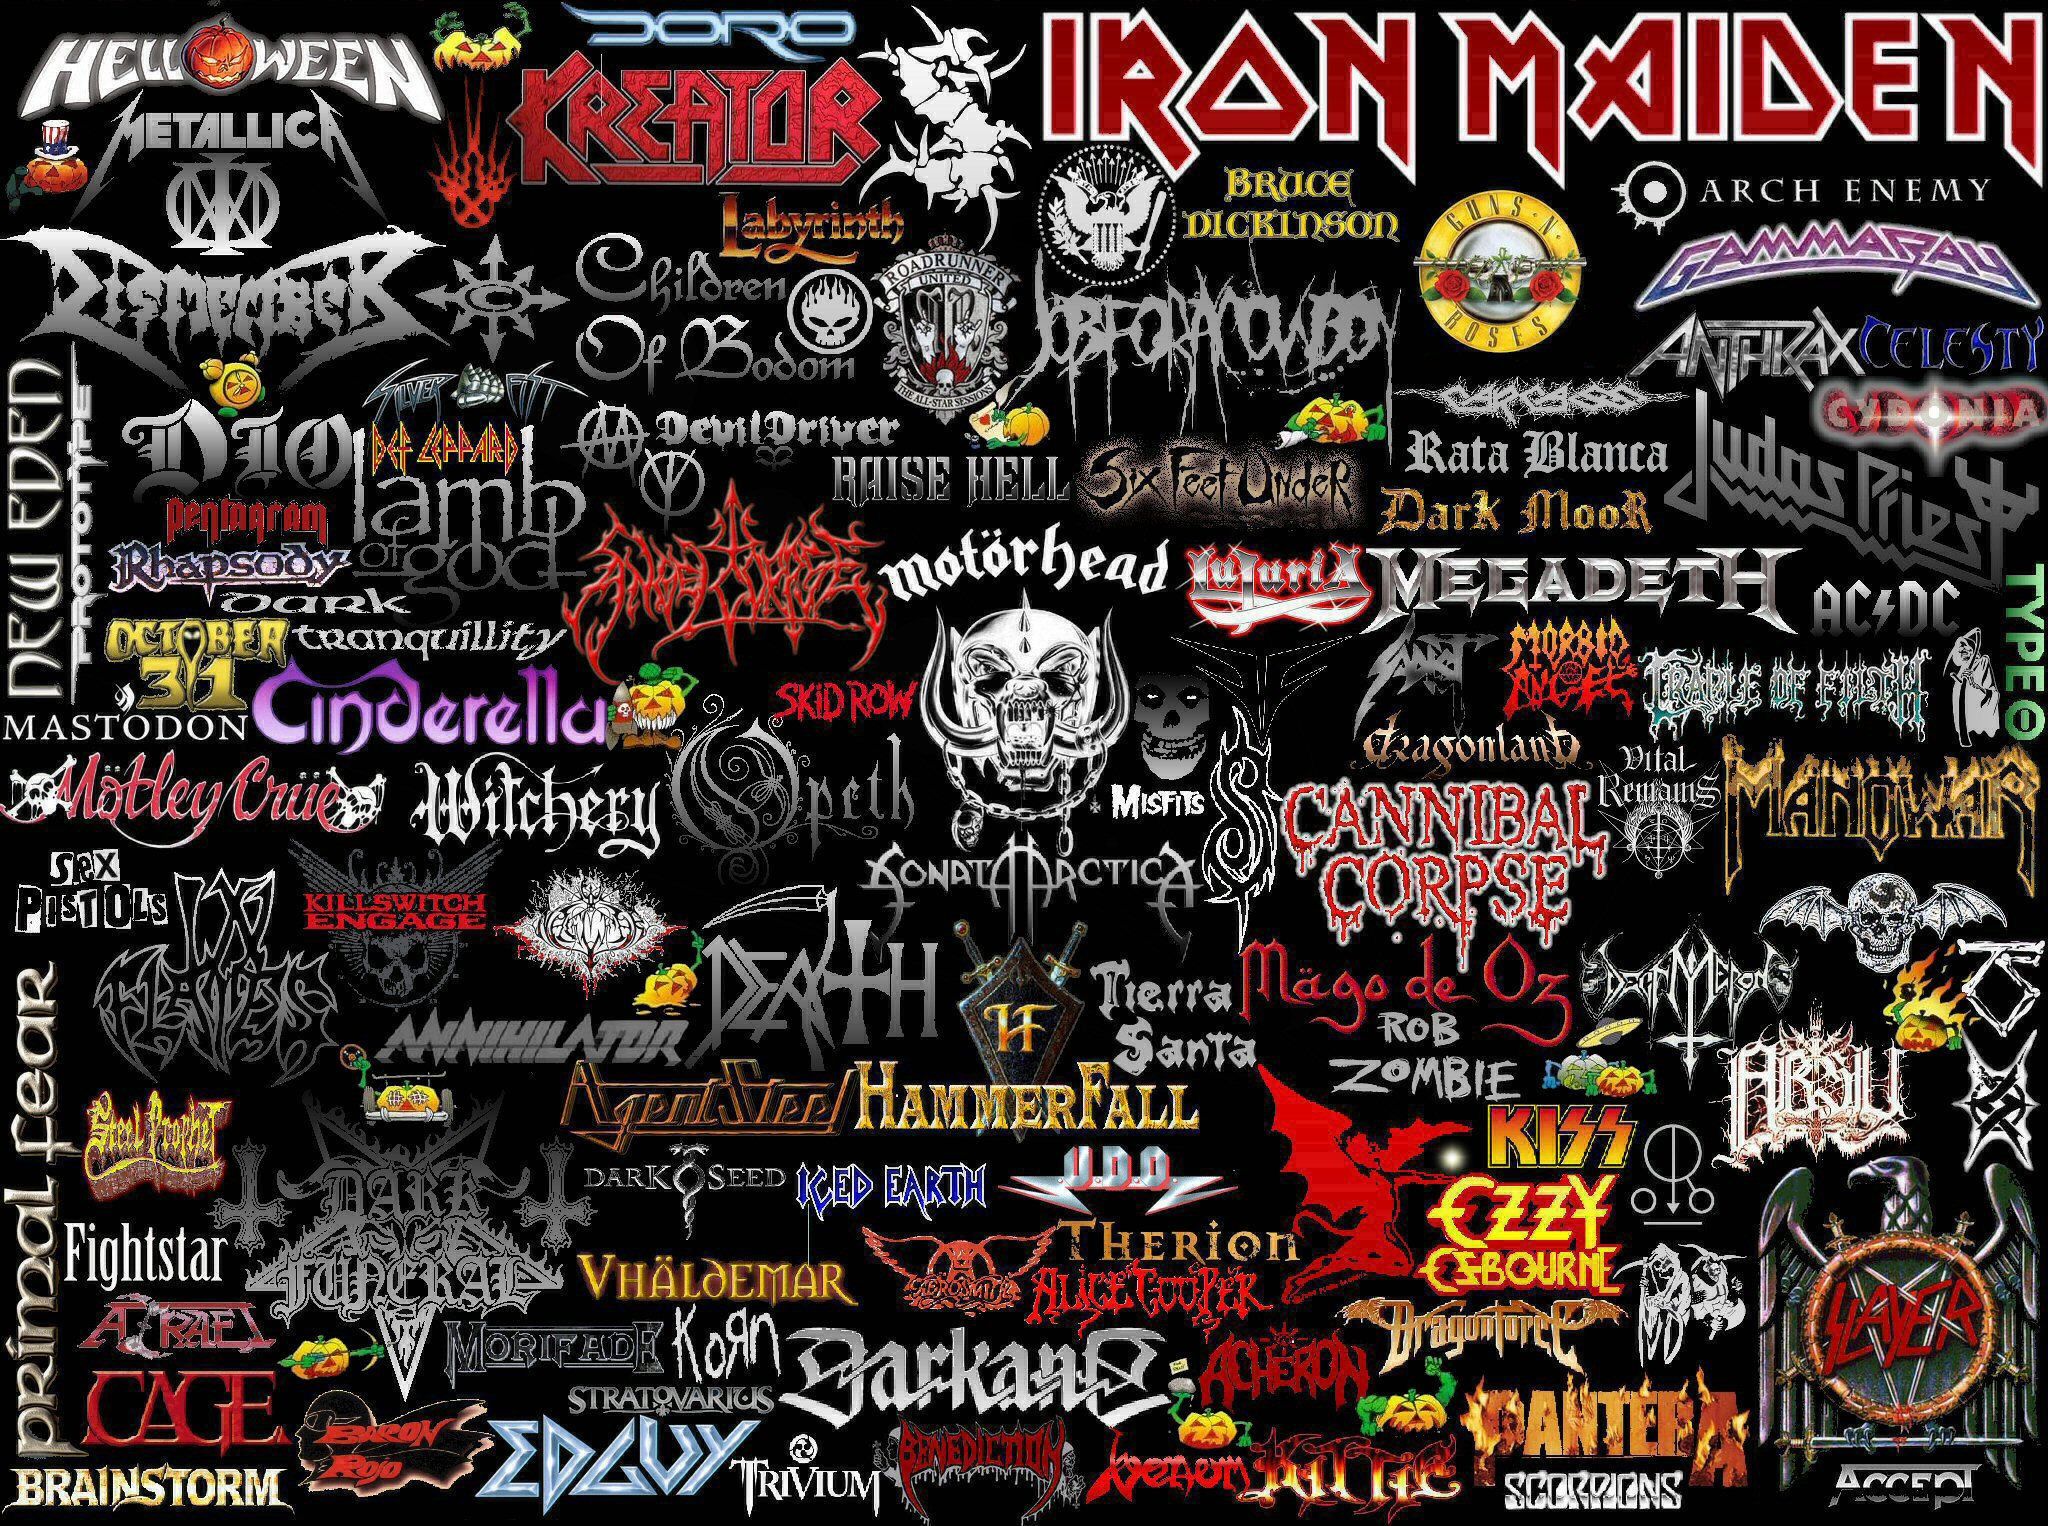 Wallpaper Of Bands